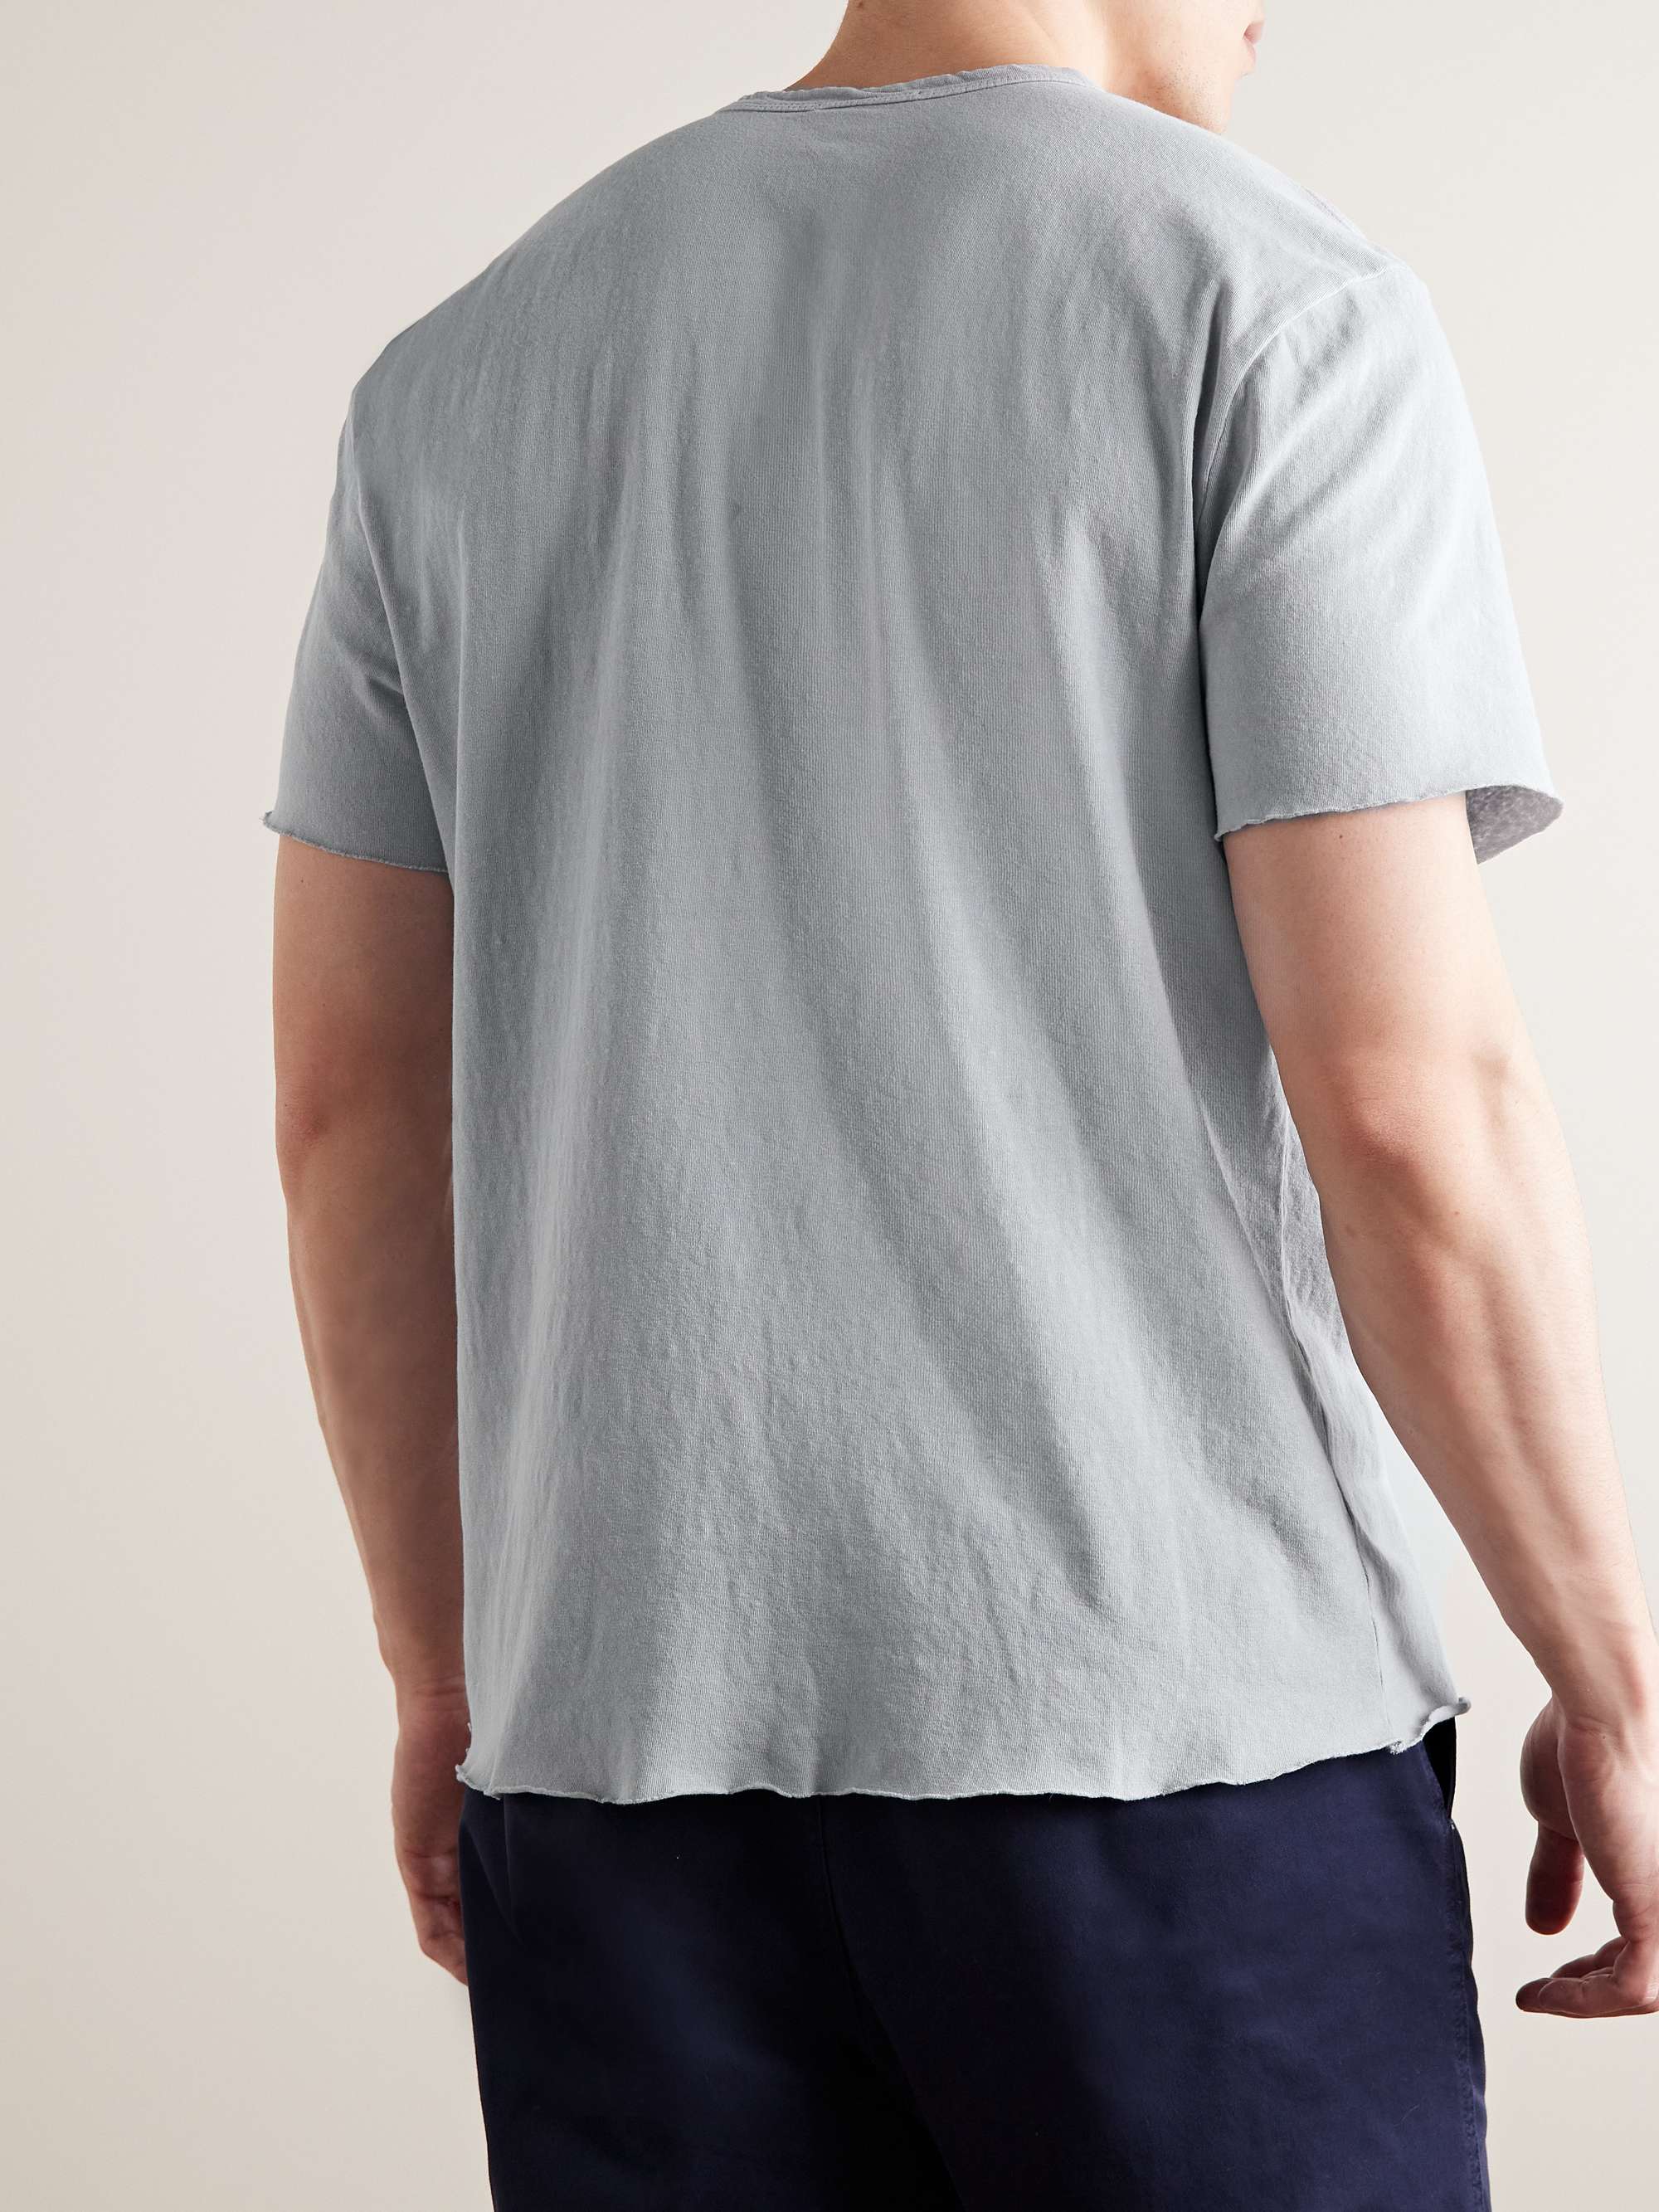 JAMES PERSE Slub Cotton and Linen-Blend Jersey T-Shirt